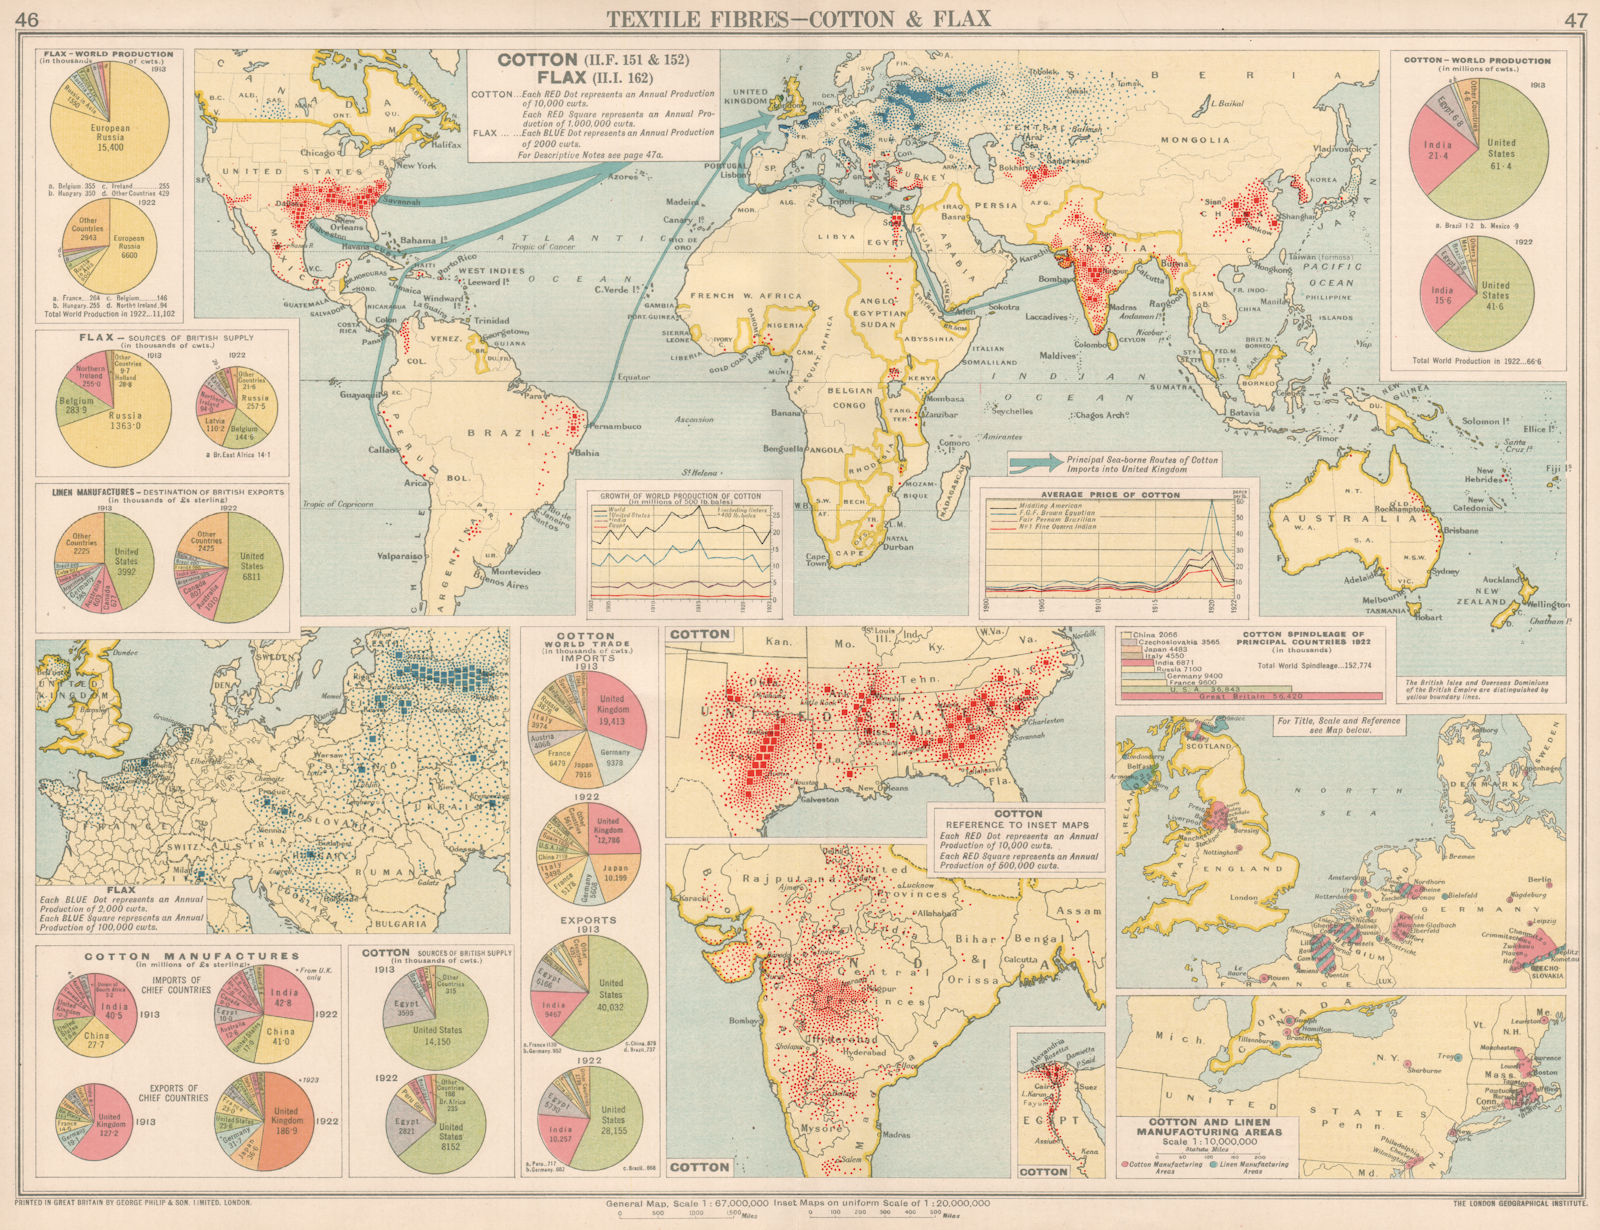 World. Textile Fibres production. Cotton, Flax & Linen. USA & India 1925 map